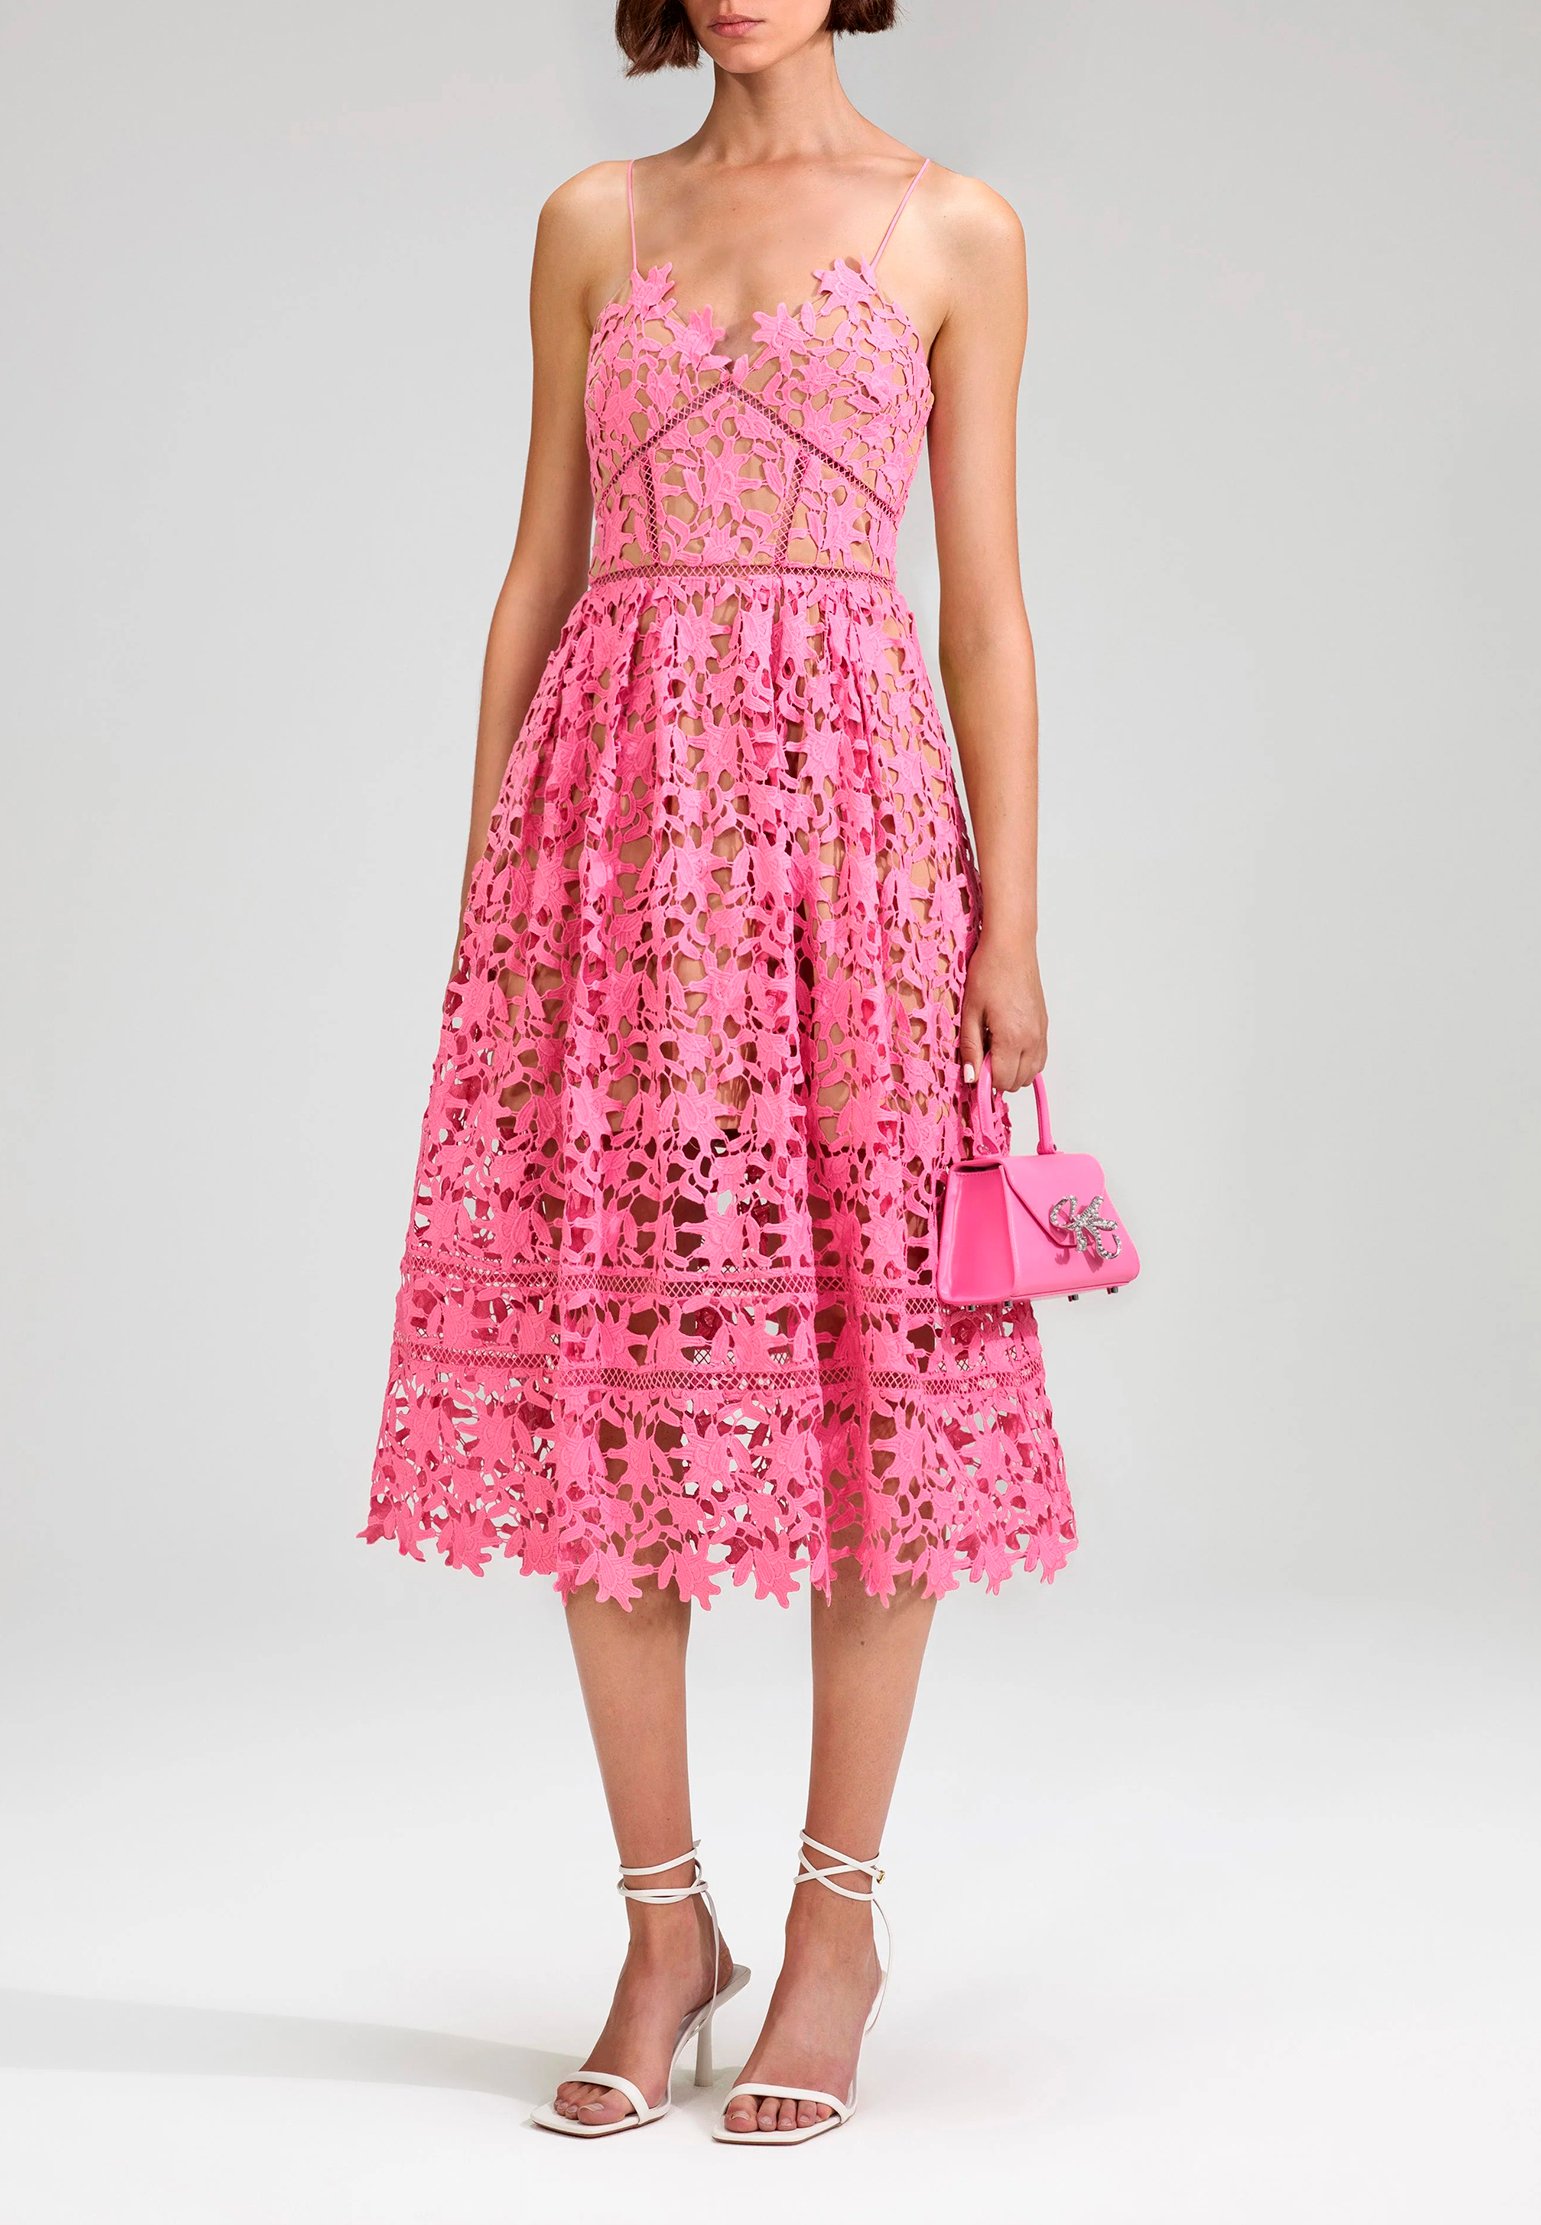 Dress SELF-PORTRAIT Color: pink (Code: 1796) in online store Allure